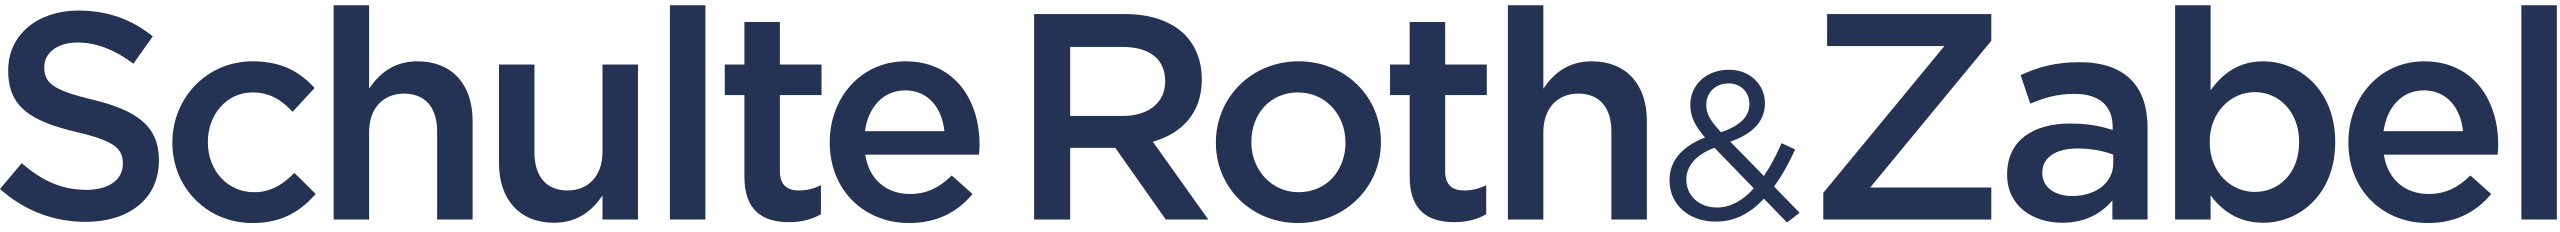 schulte-roth-zabel-srz-logo